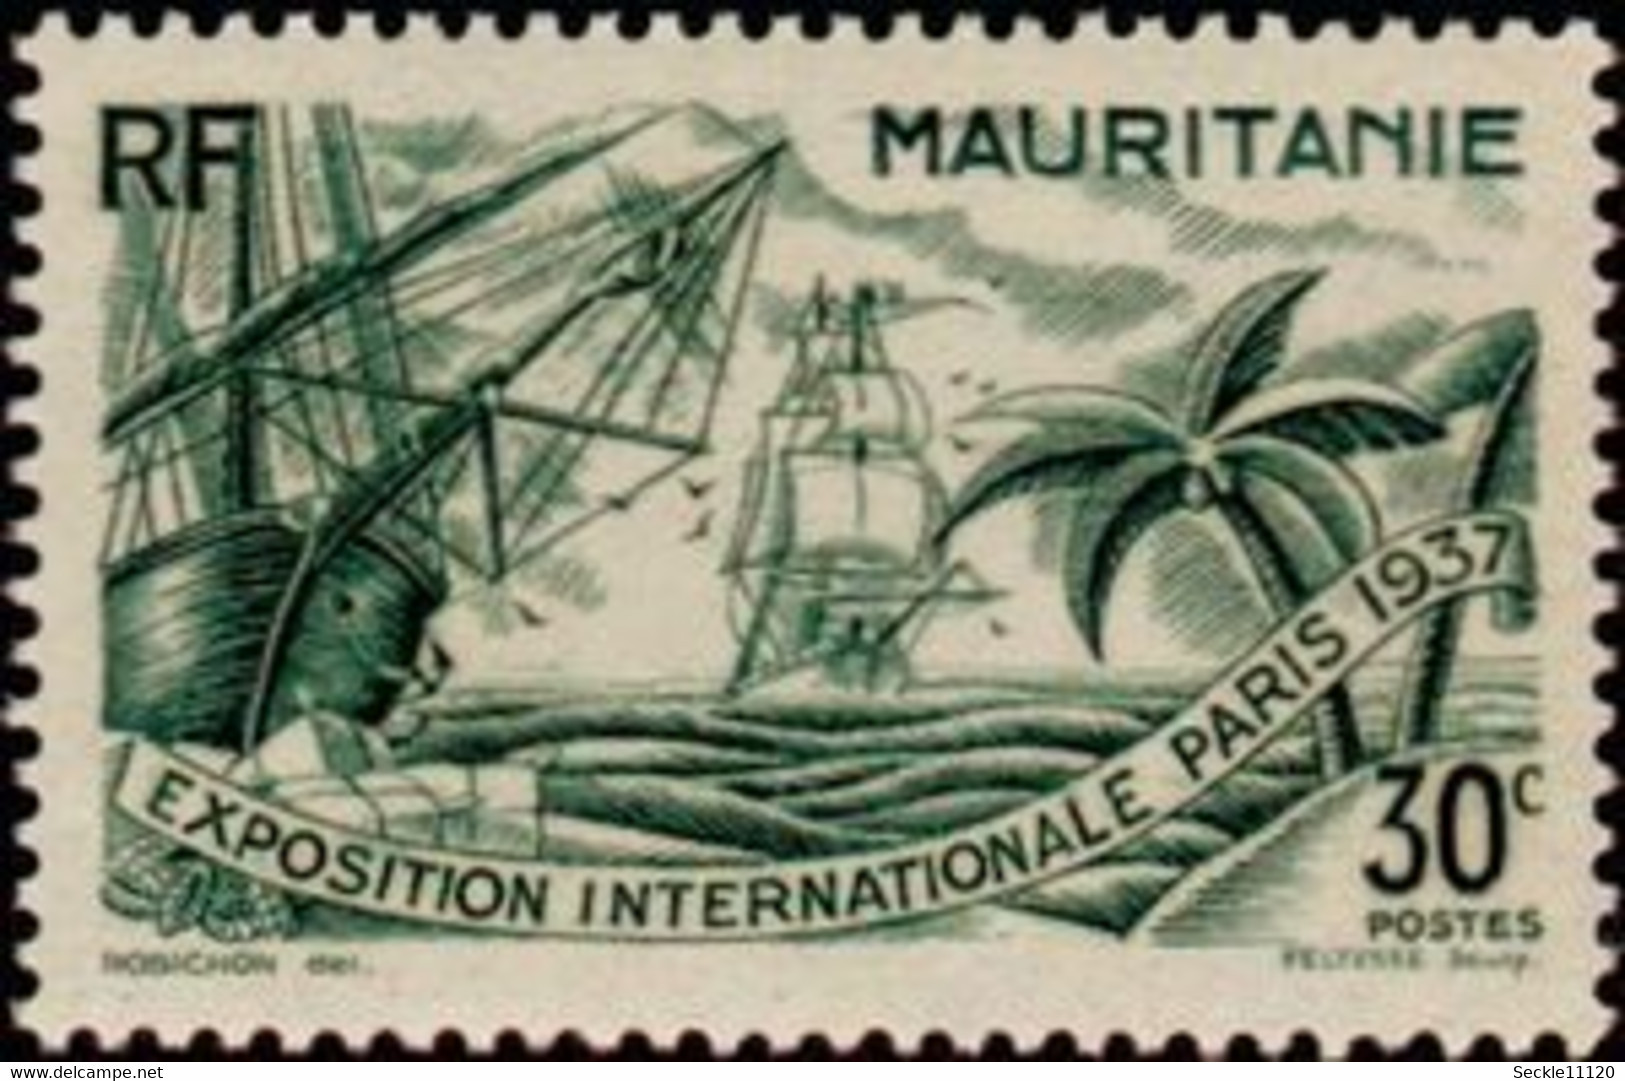 Mauritanie Mauritania - 1937 - 66 / 71 - Exposition Internationale De Paris - MH - Mauritanie (1960-...)